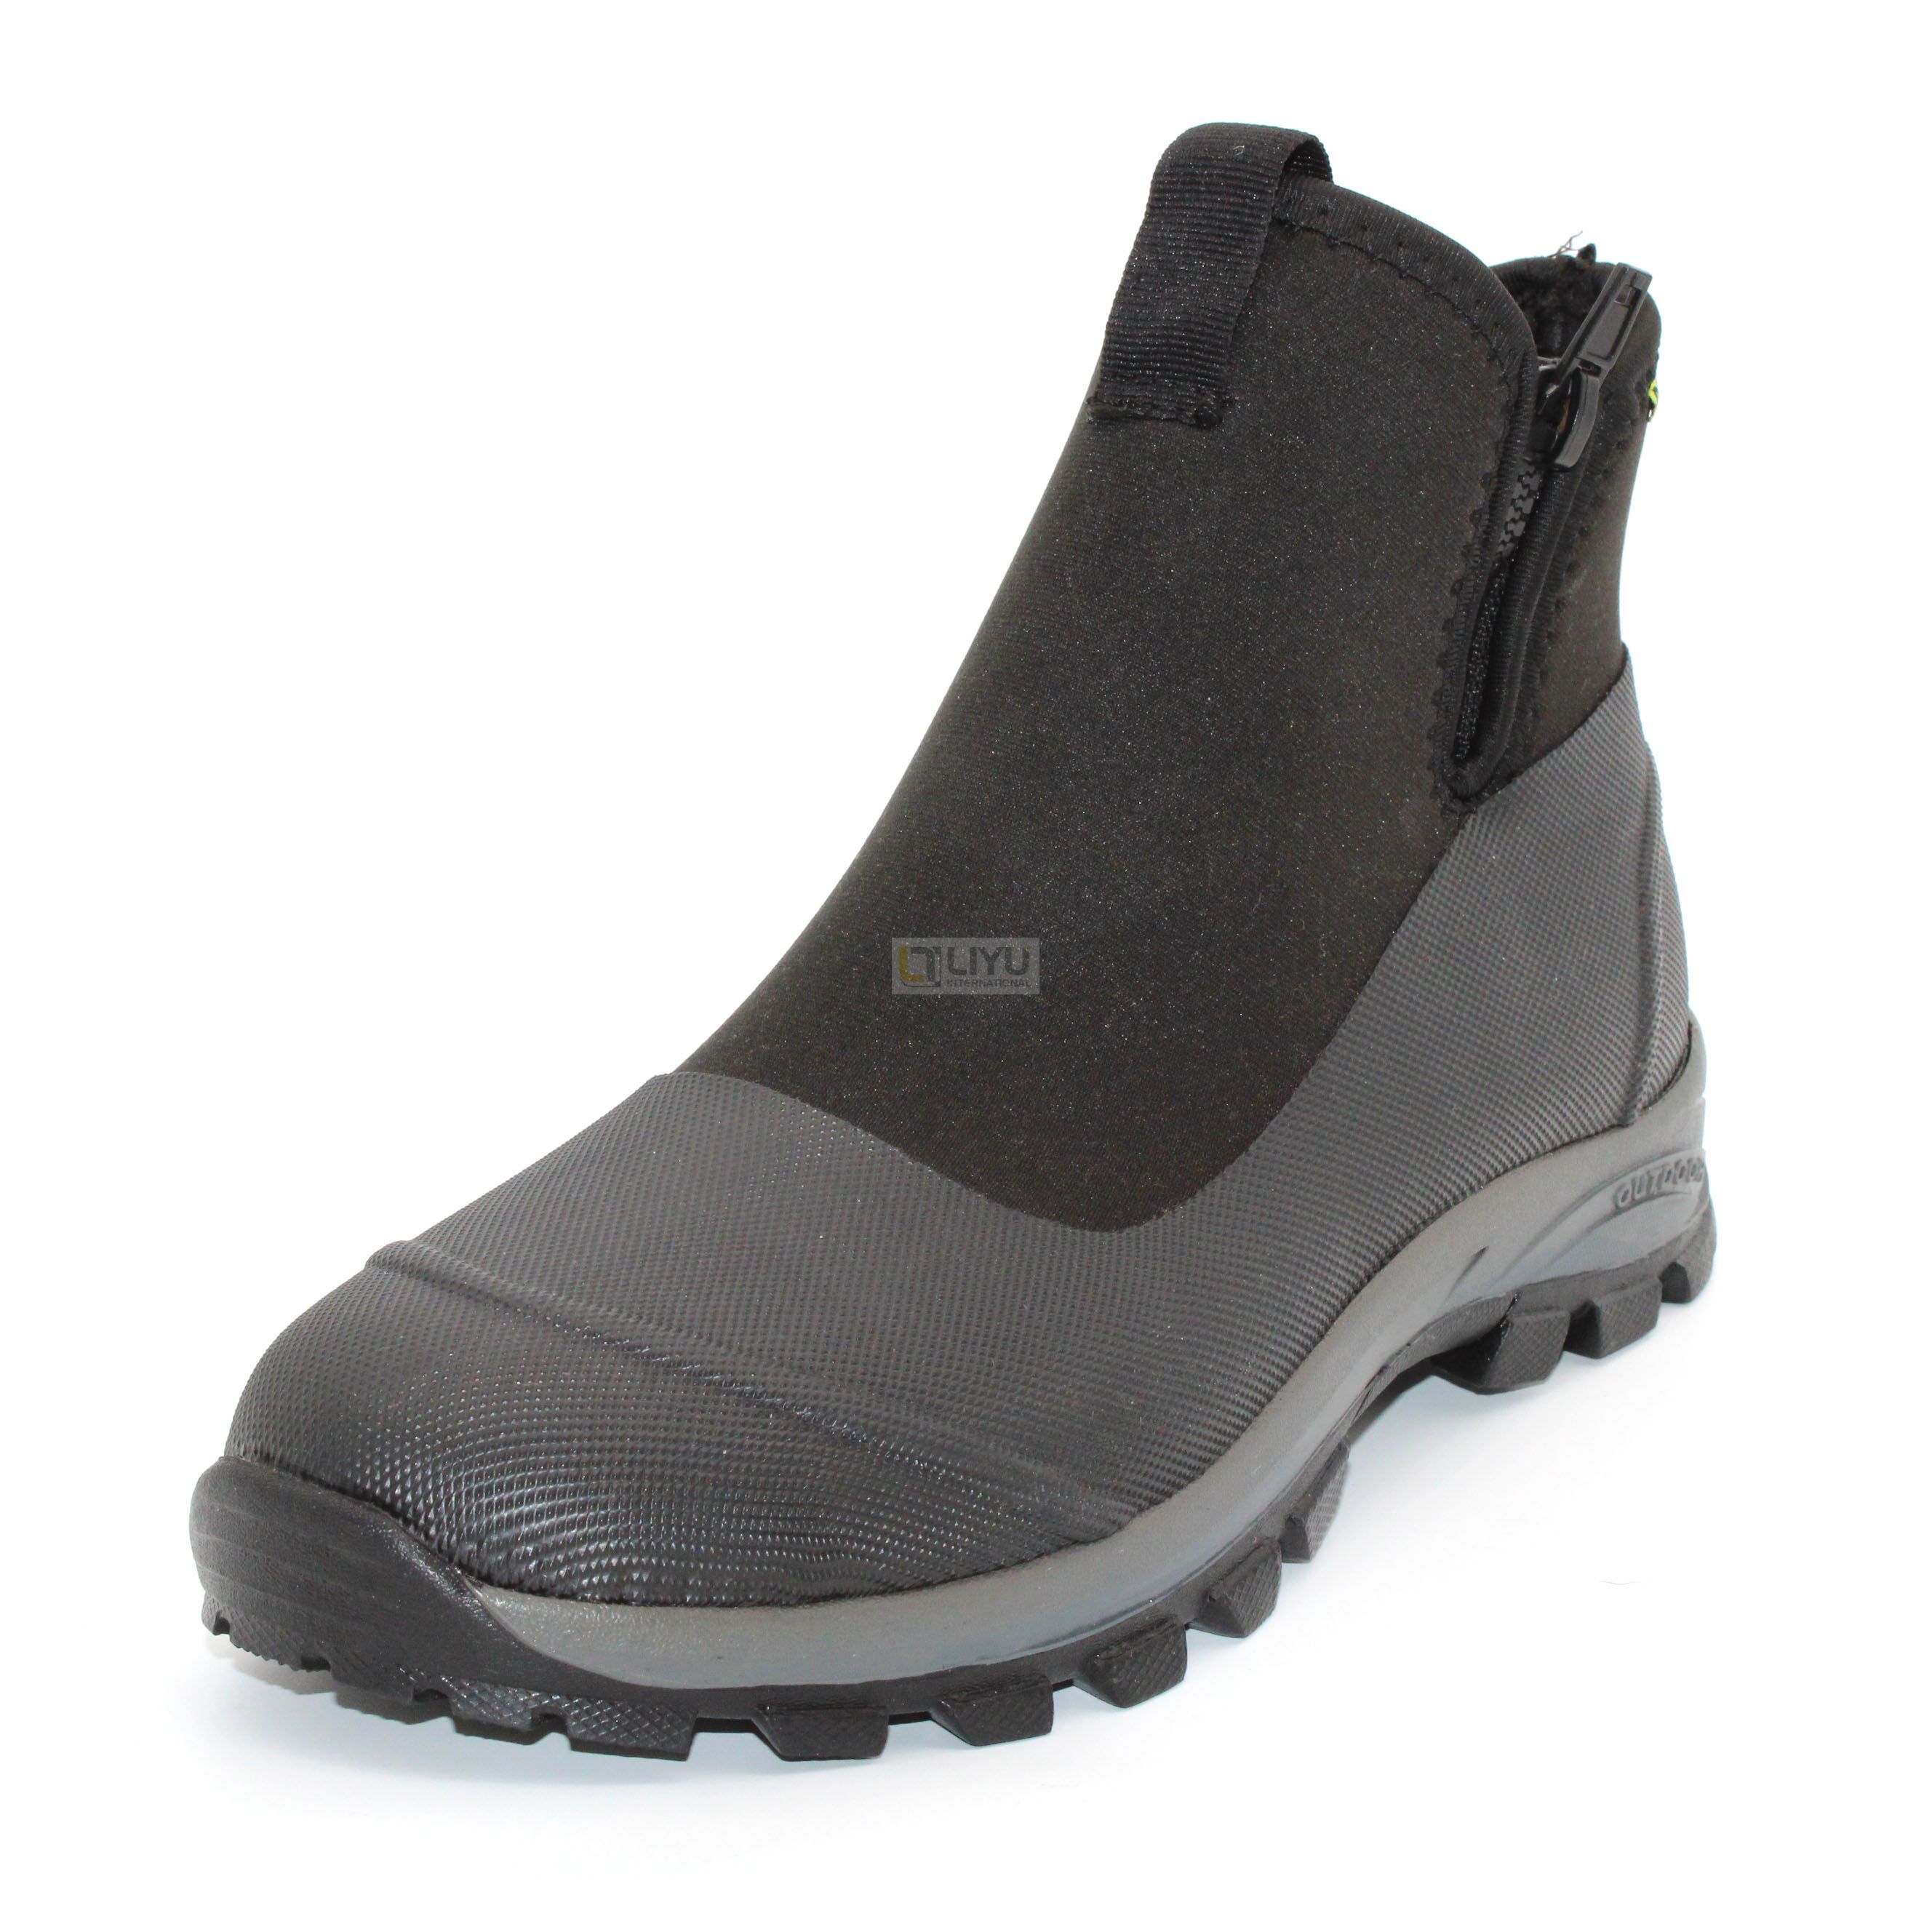 Adult Black Rubber Shoes Neoprene Waterproof Rain Boots Outdoor Shoes